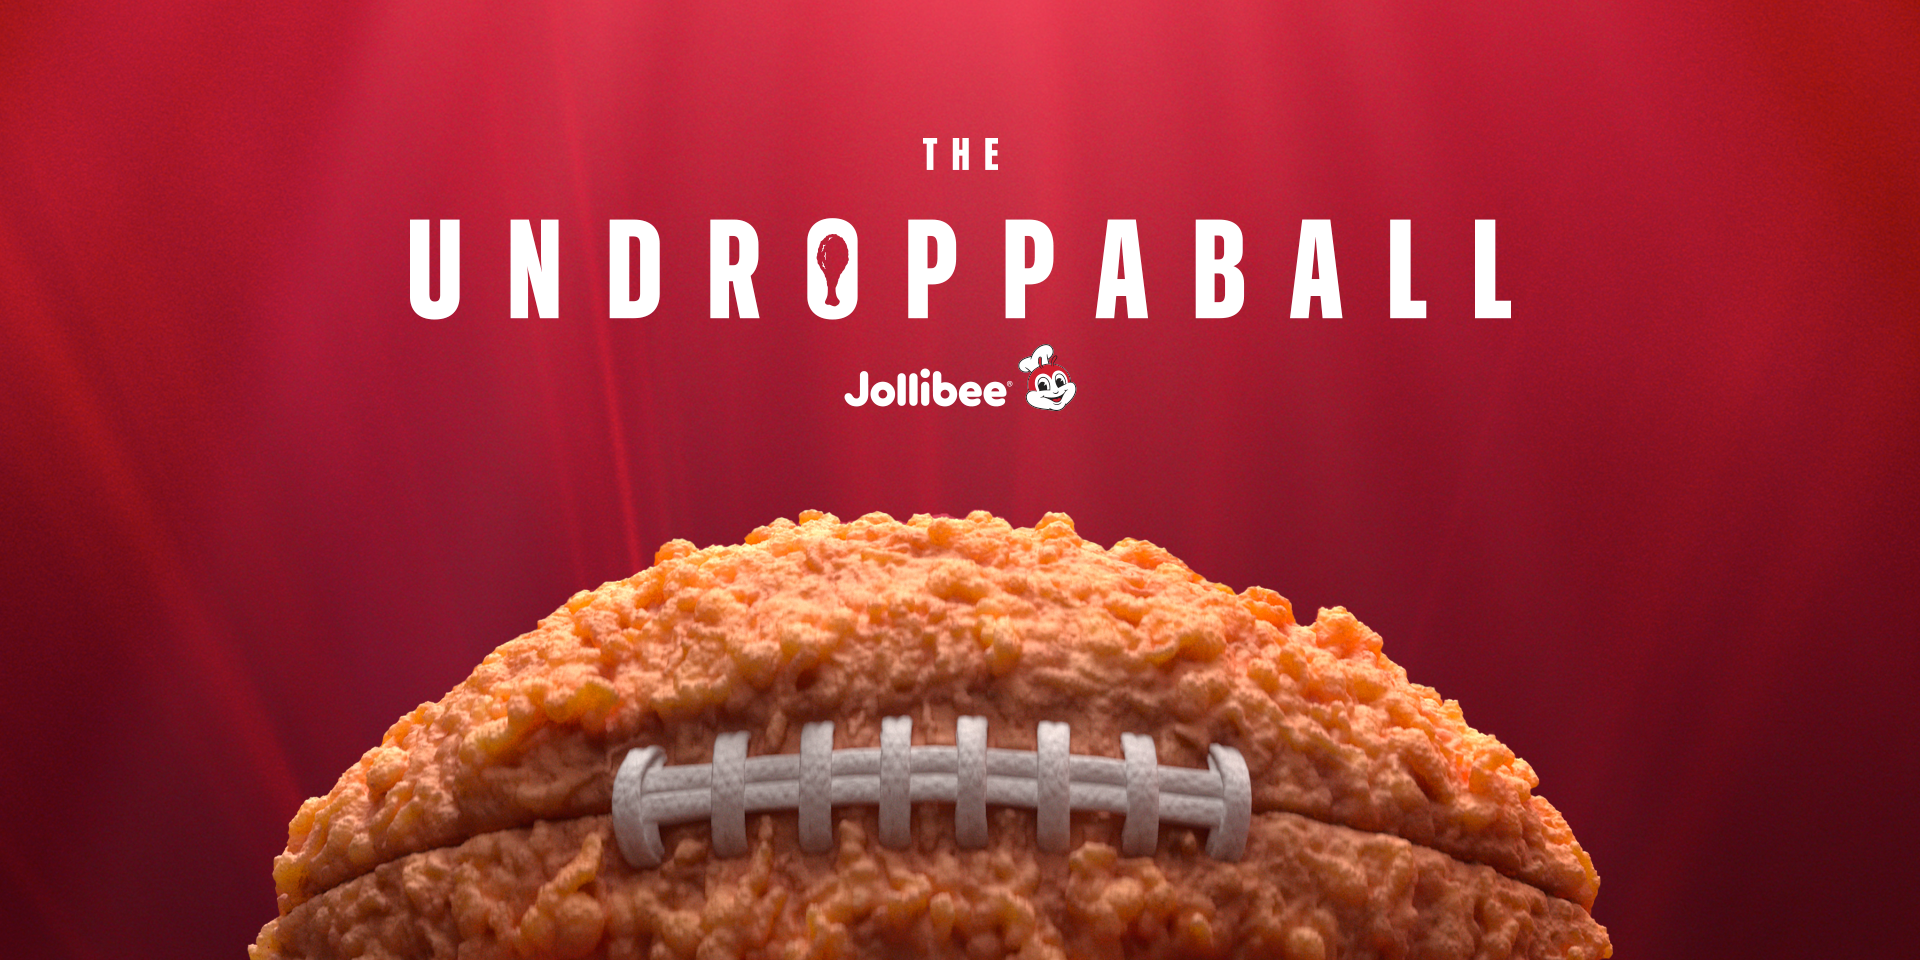 "The Undroppaball” from Jollibee